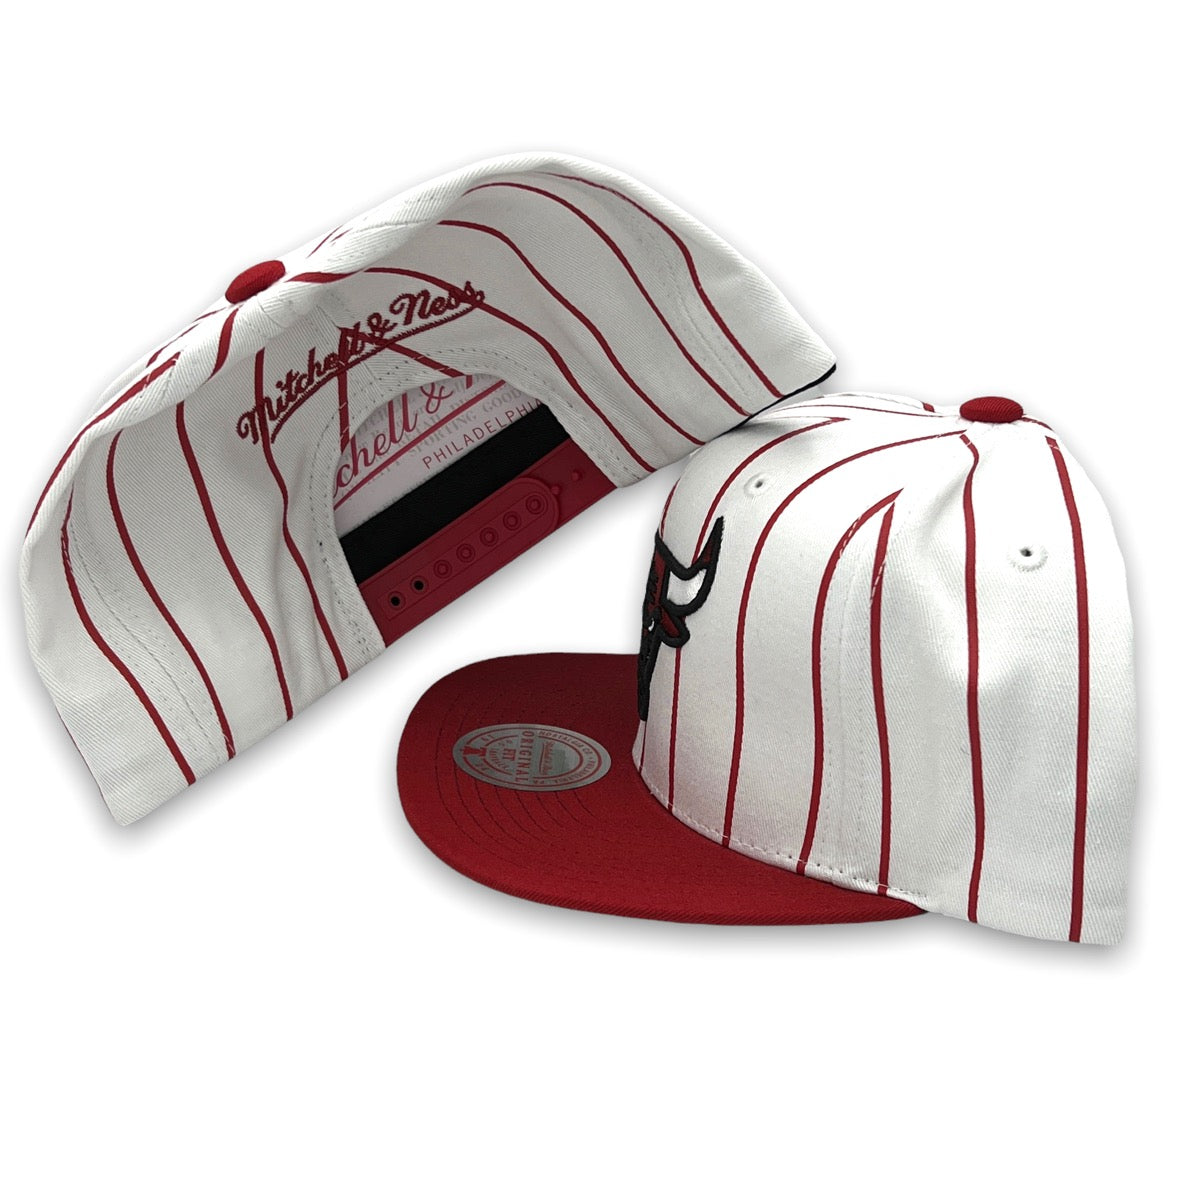 Mitchell & Ness Men's Mitchell & Ness White/Royal Texas Rangers Hometown  Snapback Hat